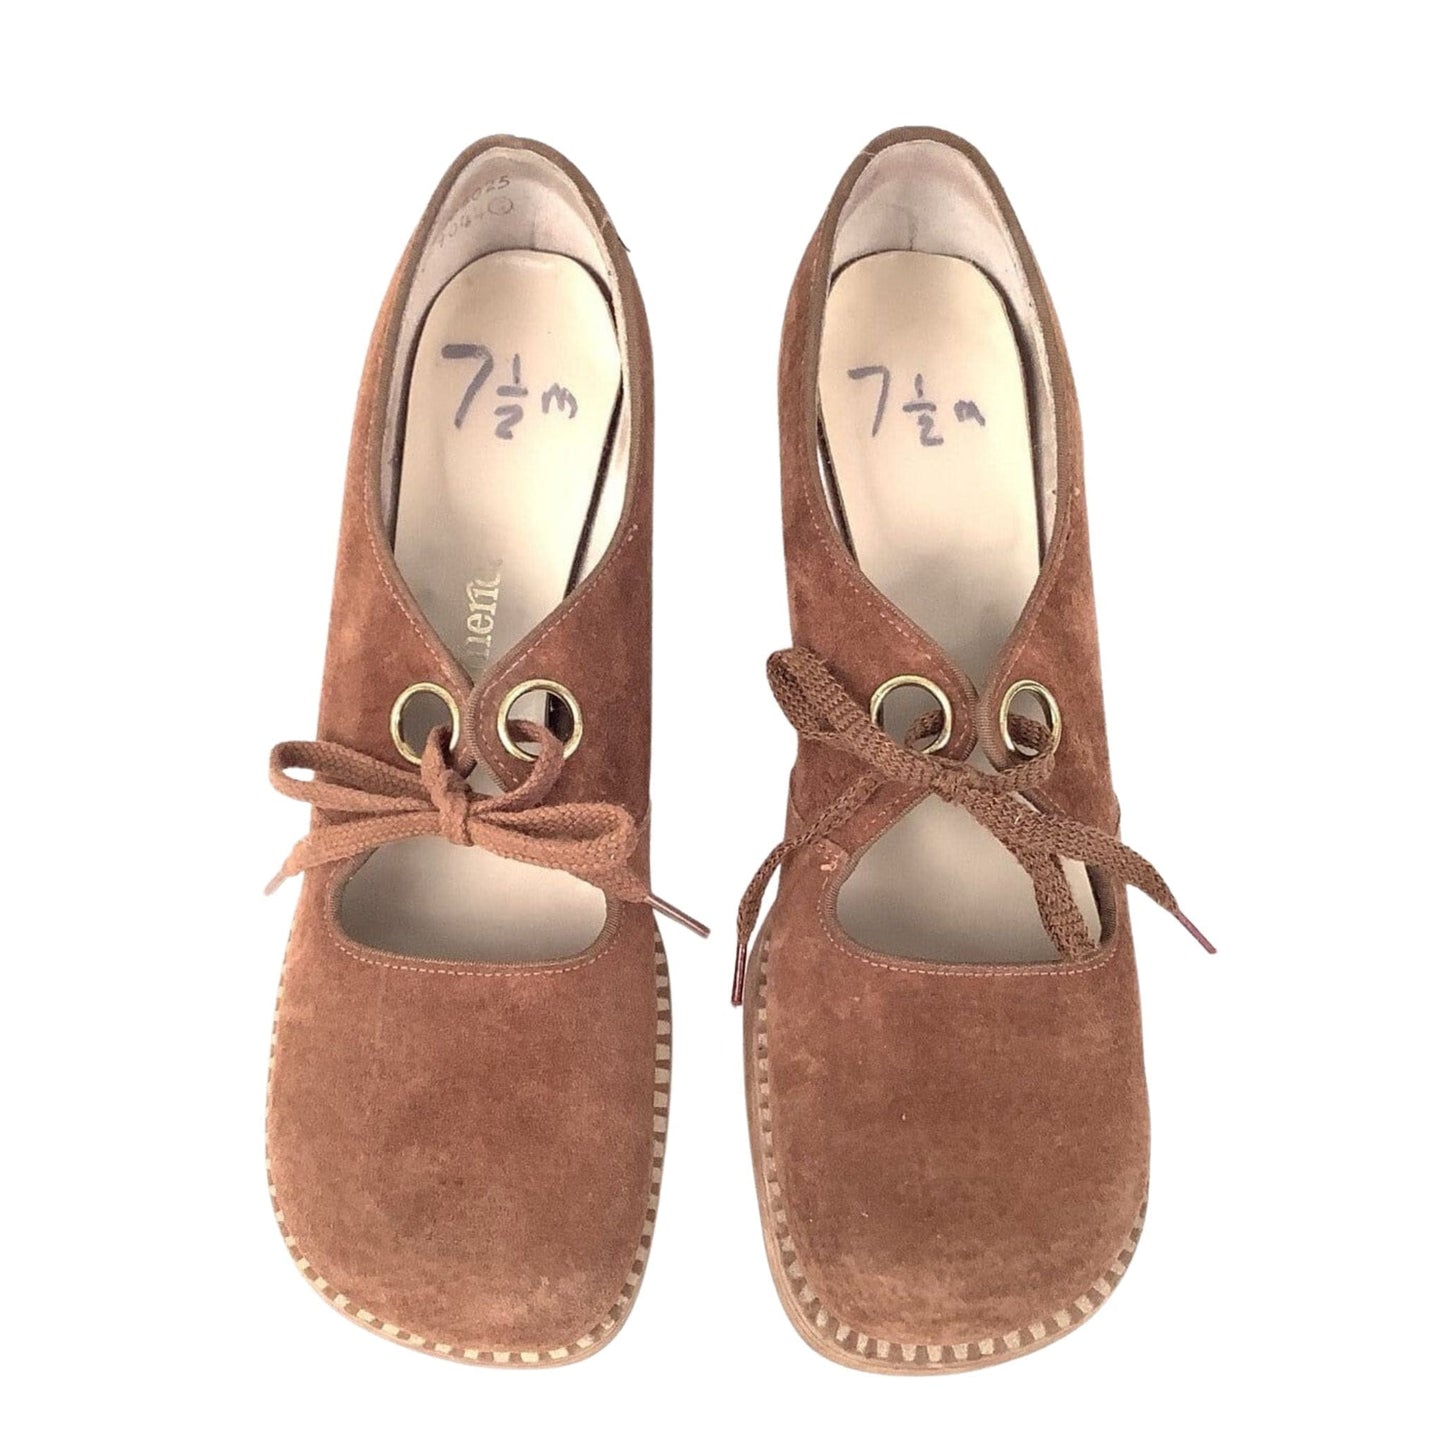 1970s Schoolgirl Style Shoes 7.5 / Brown / Vintage 1970s